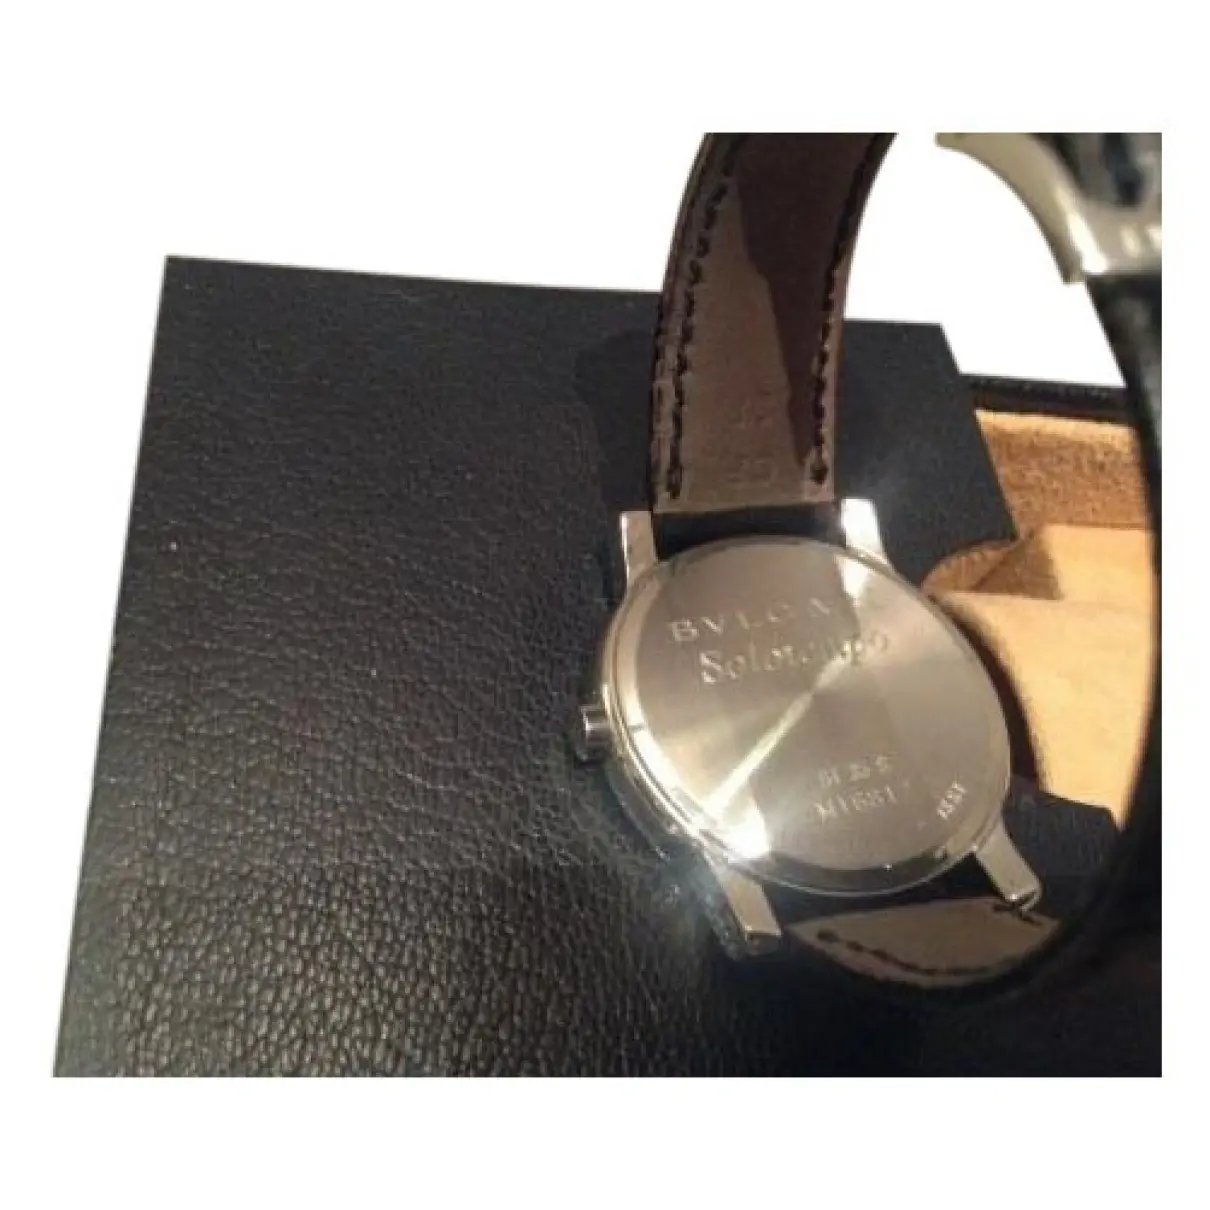 Buy Bvlgari White Steel Watch online